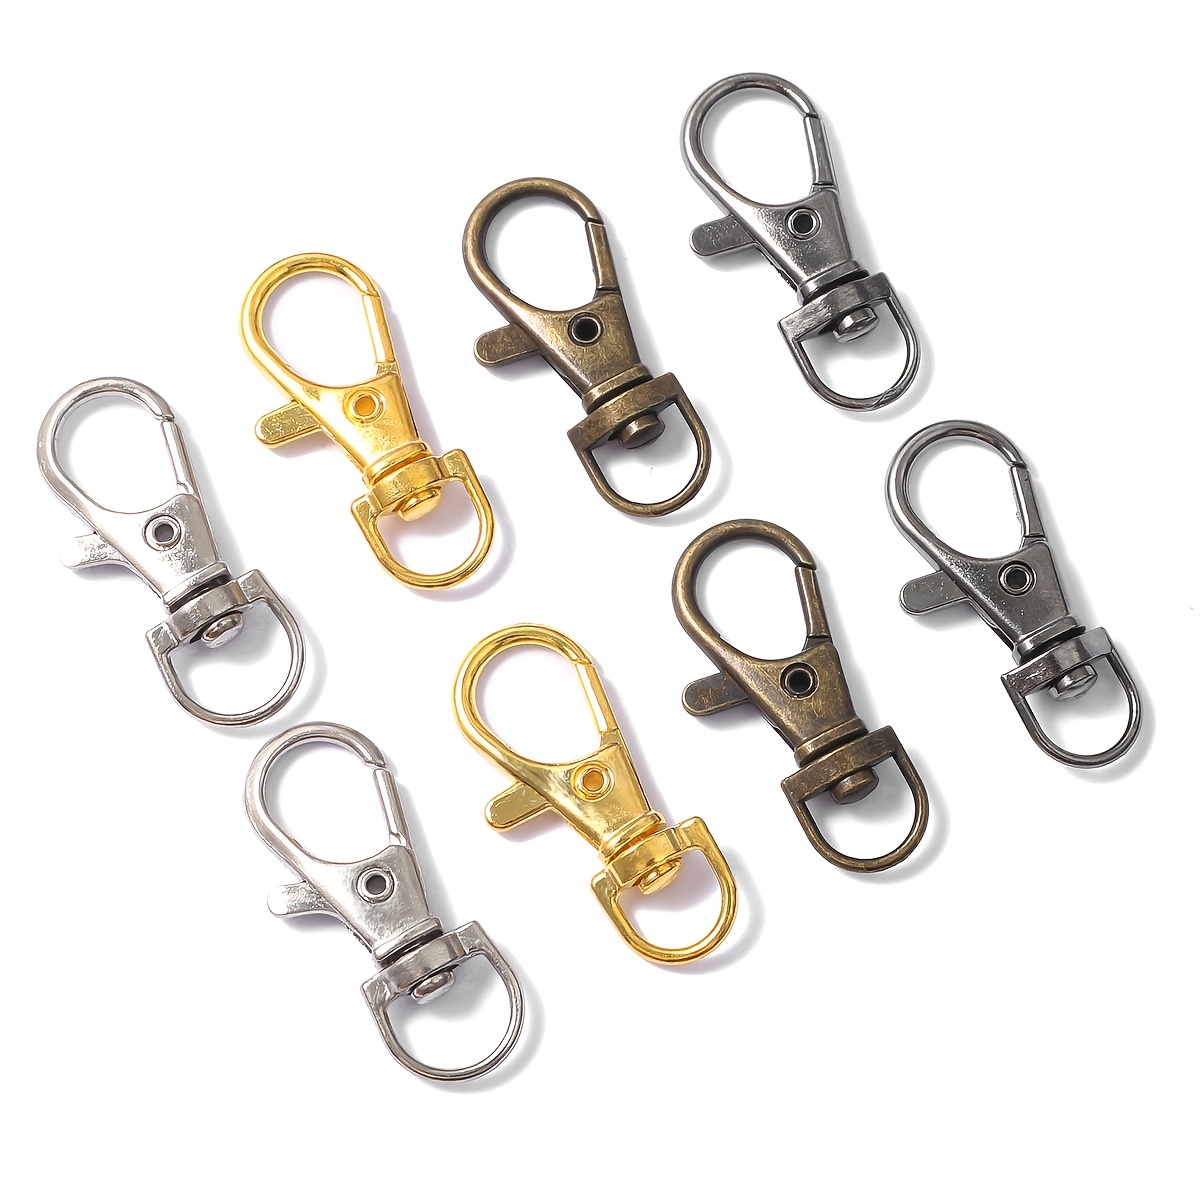 Keychain Hook Clip, 20Pcs Swivel Snap Hook Lobster Claw Clasp